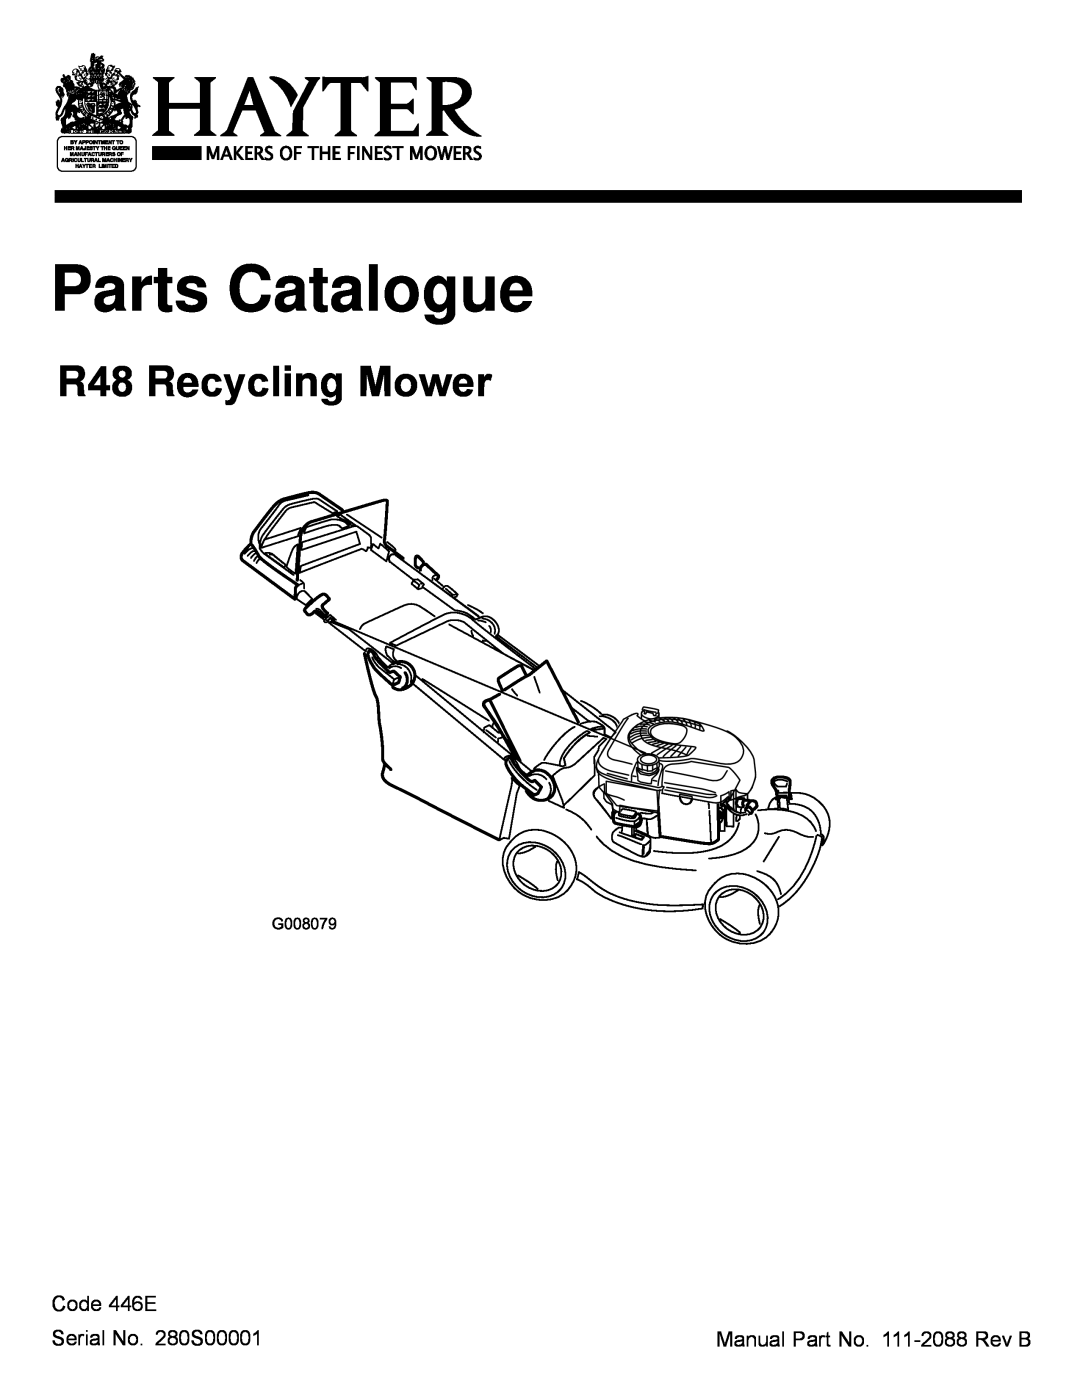 Hayter Mowers manual Parts Catalogue, R48 Recycling Mower, Code 446E, Serial No. 280S00001 